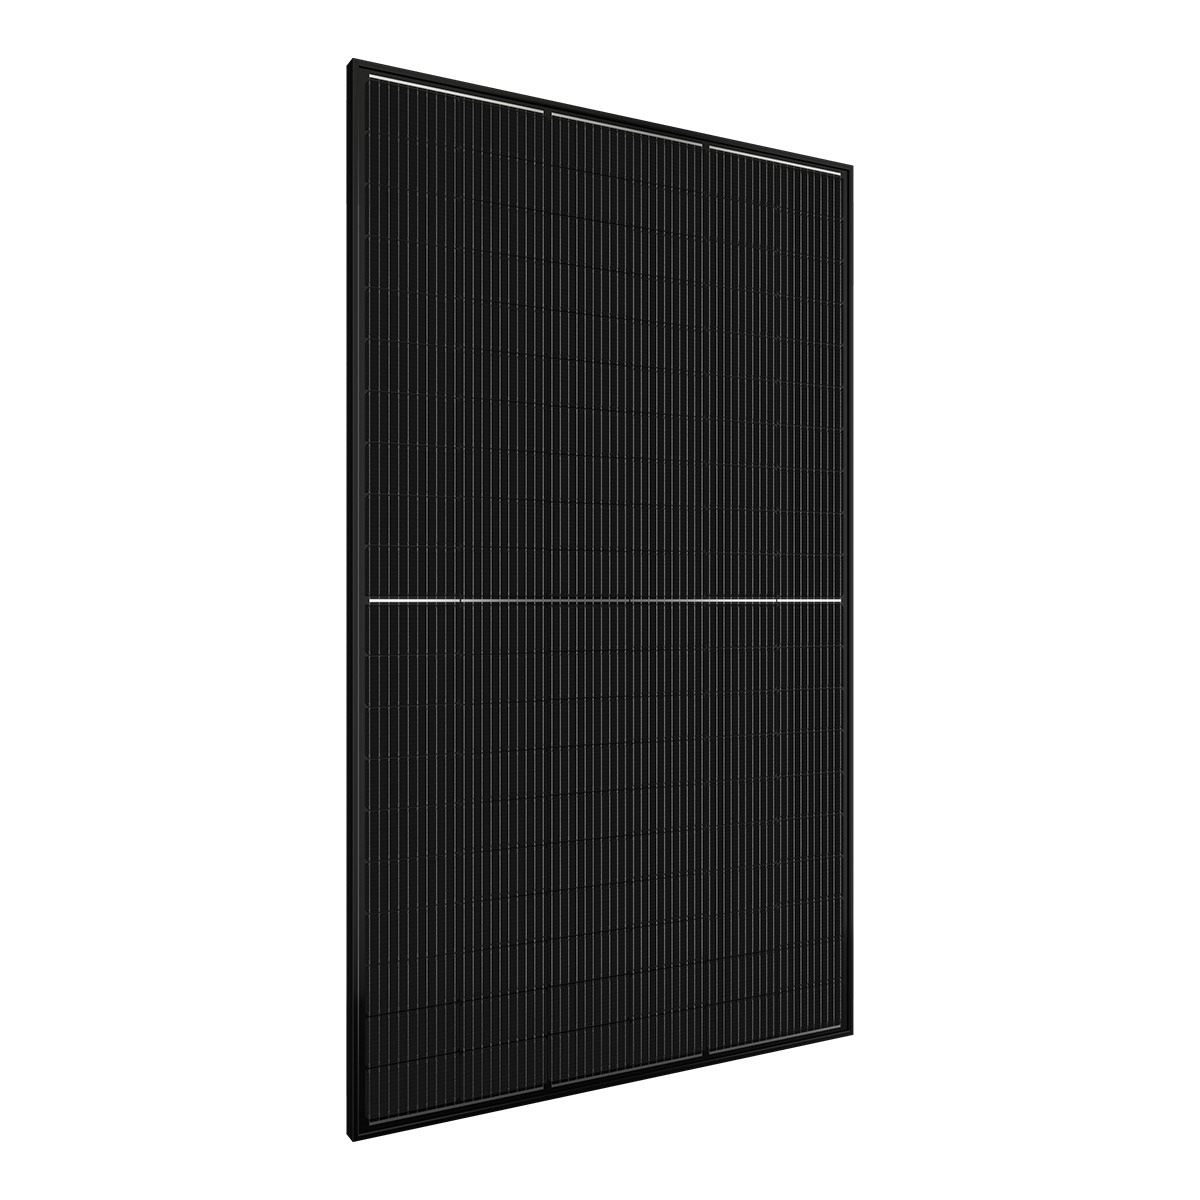 TommaTech 445Wp 120PM M10 Dark Series Solar Panel